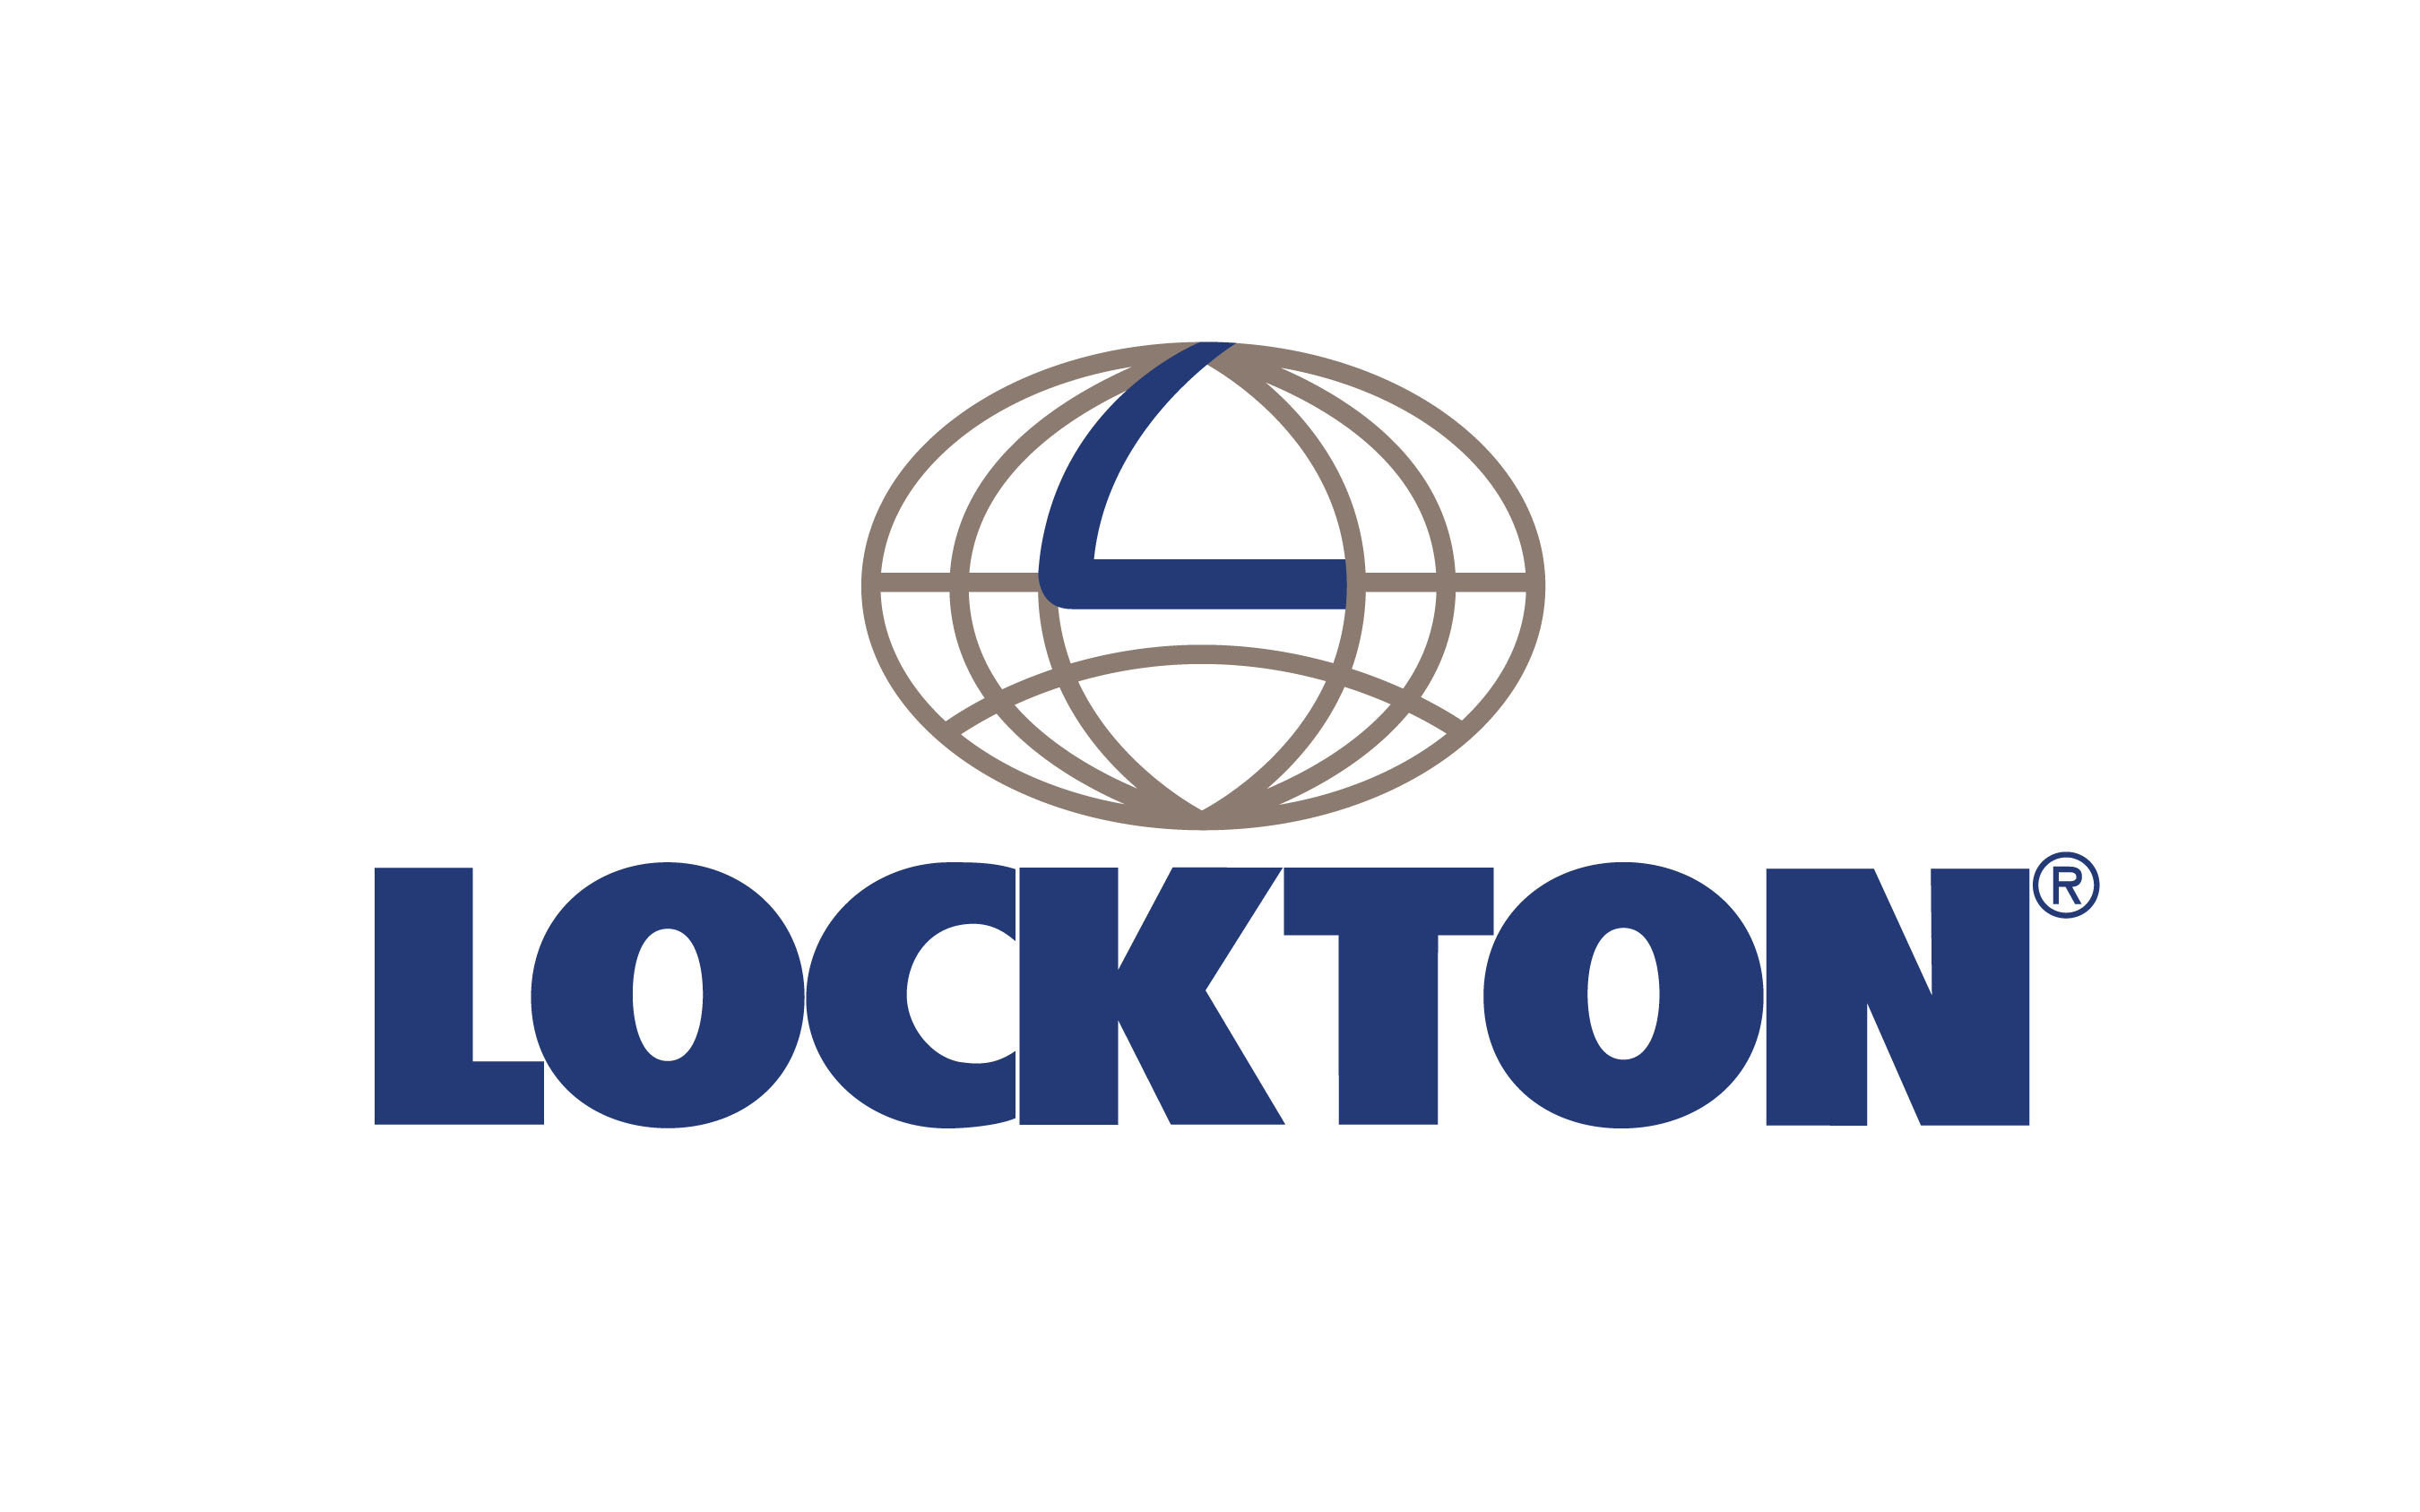 Lockton Re names Ross Howard chairman amid leadership reshuffle